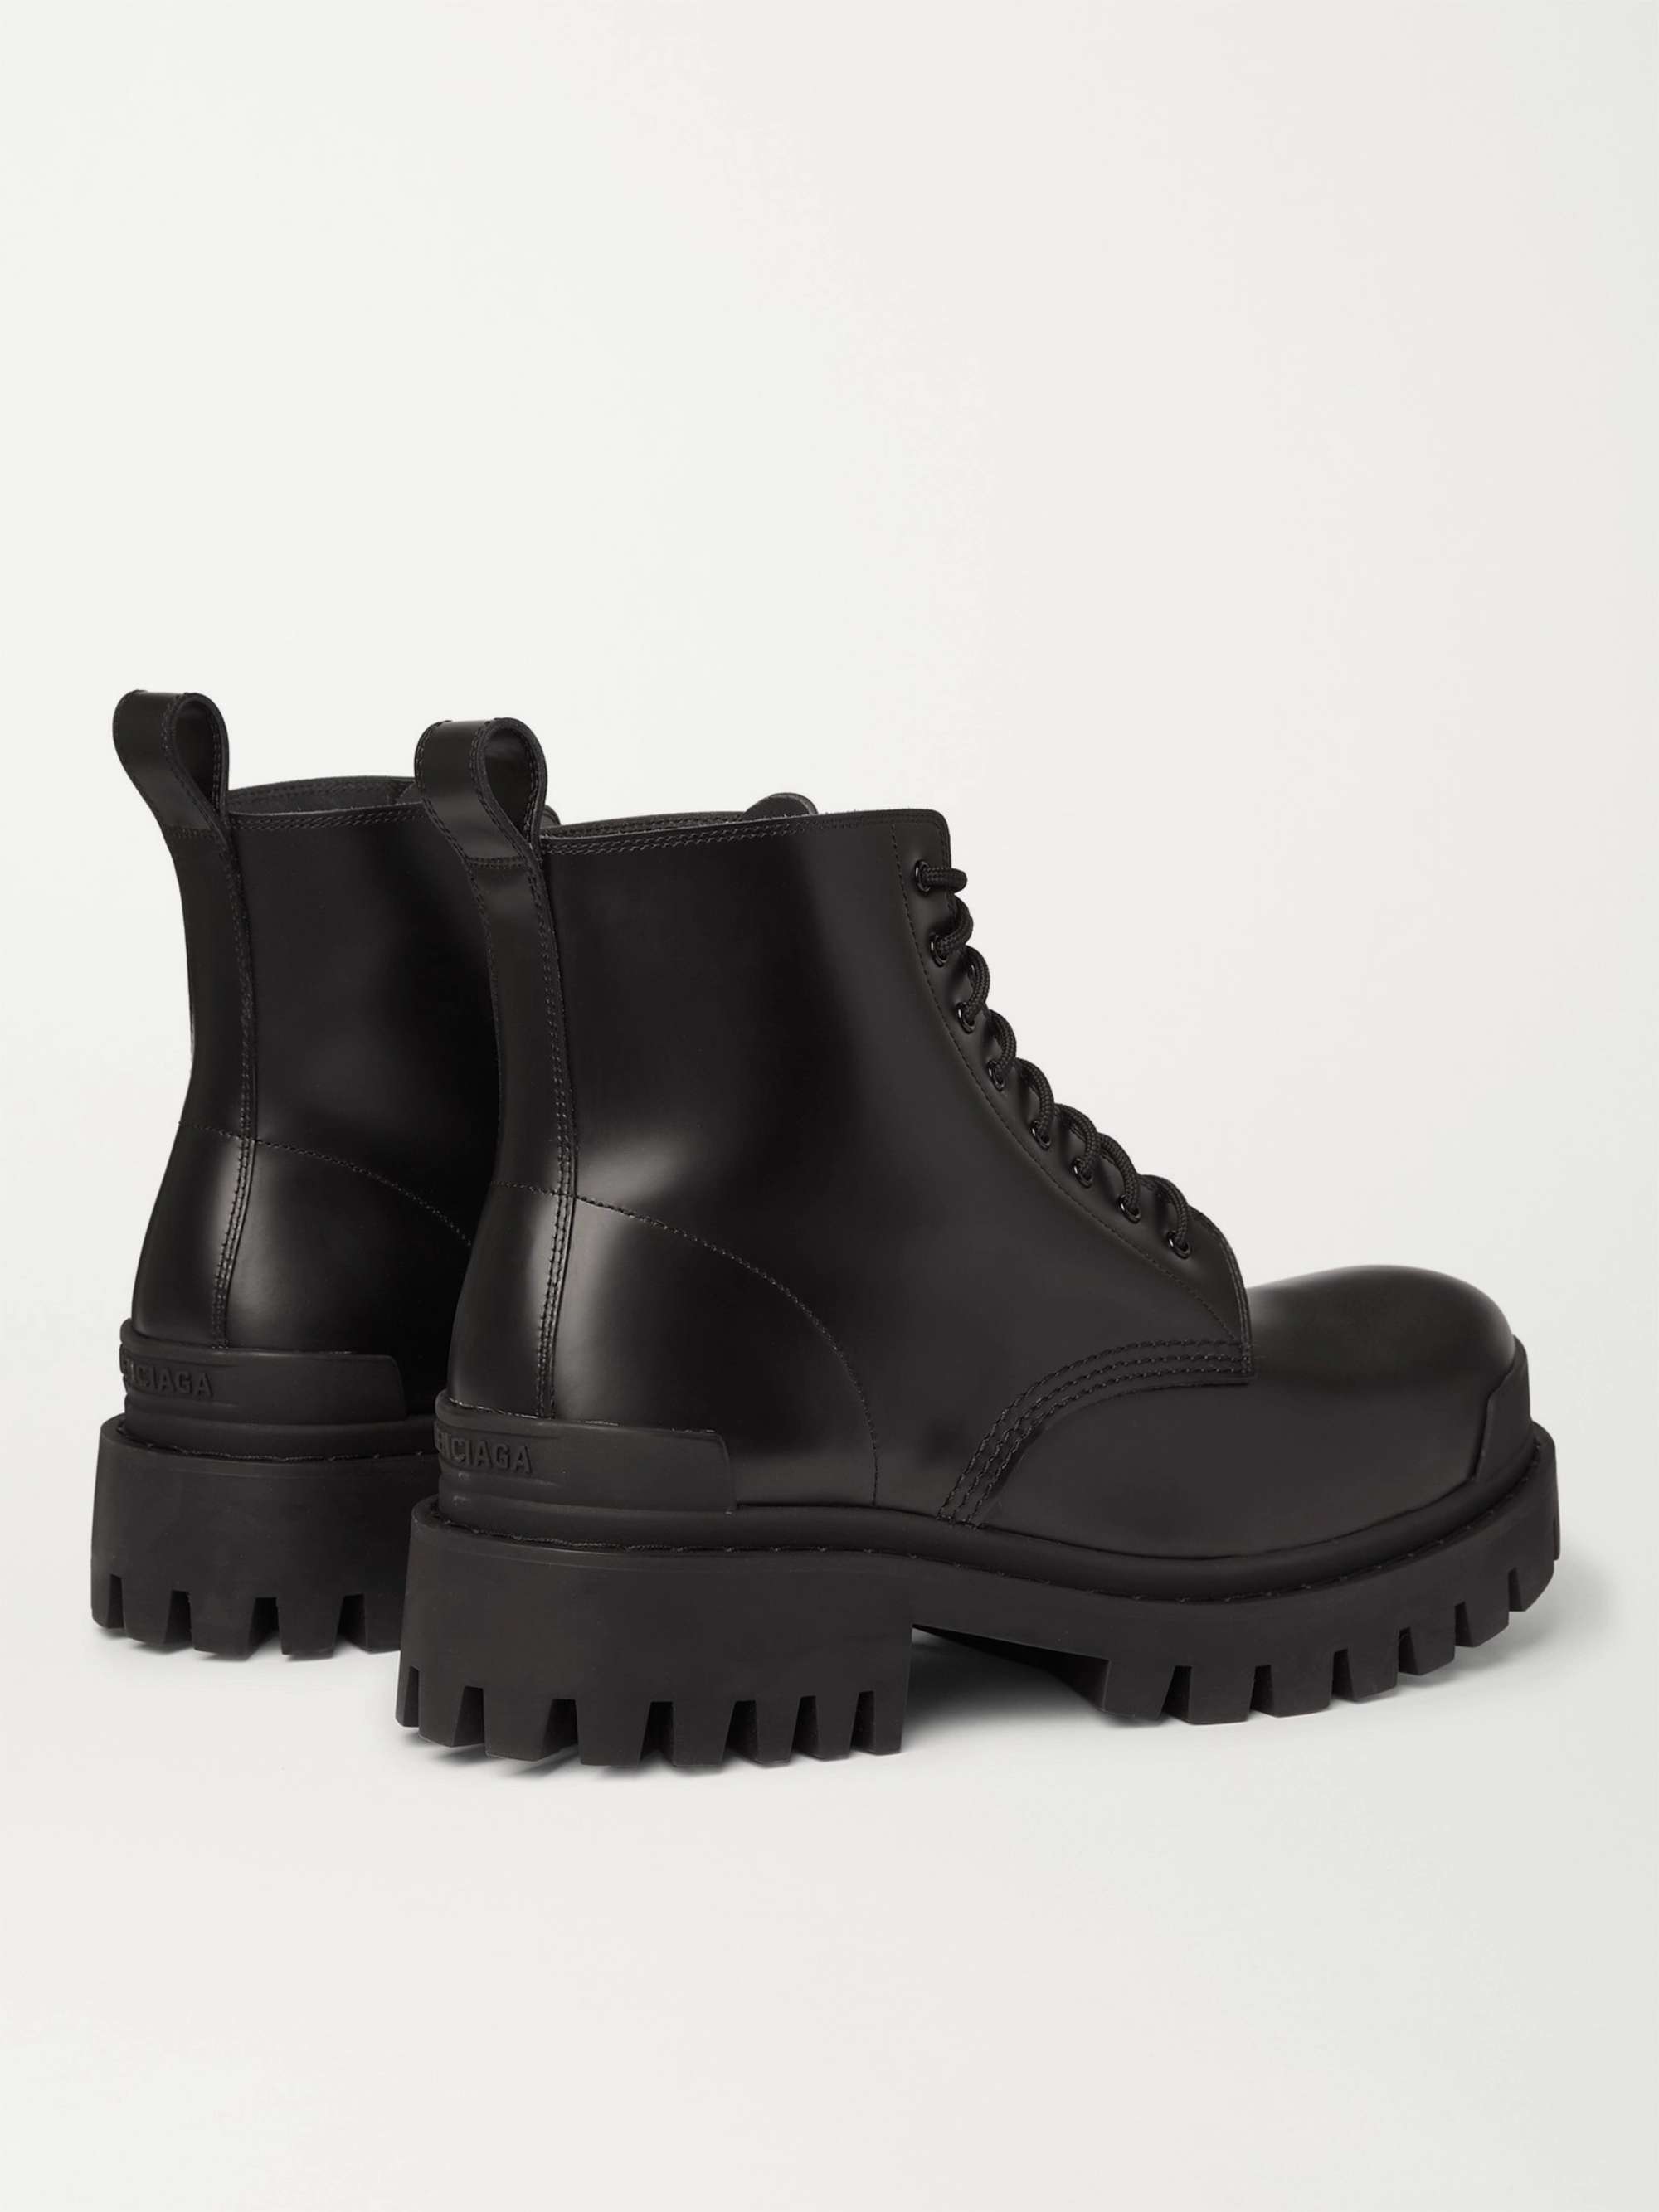 BALENCIAGA Leather Boots